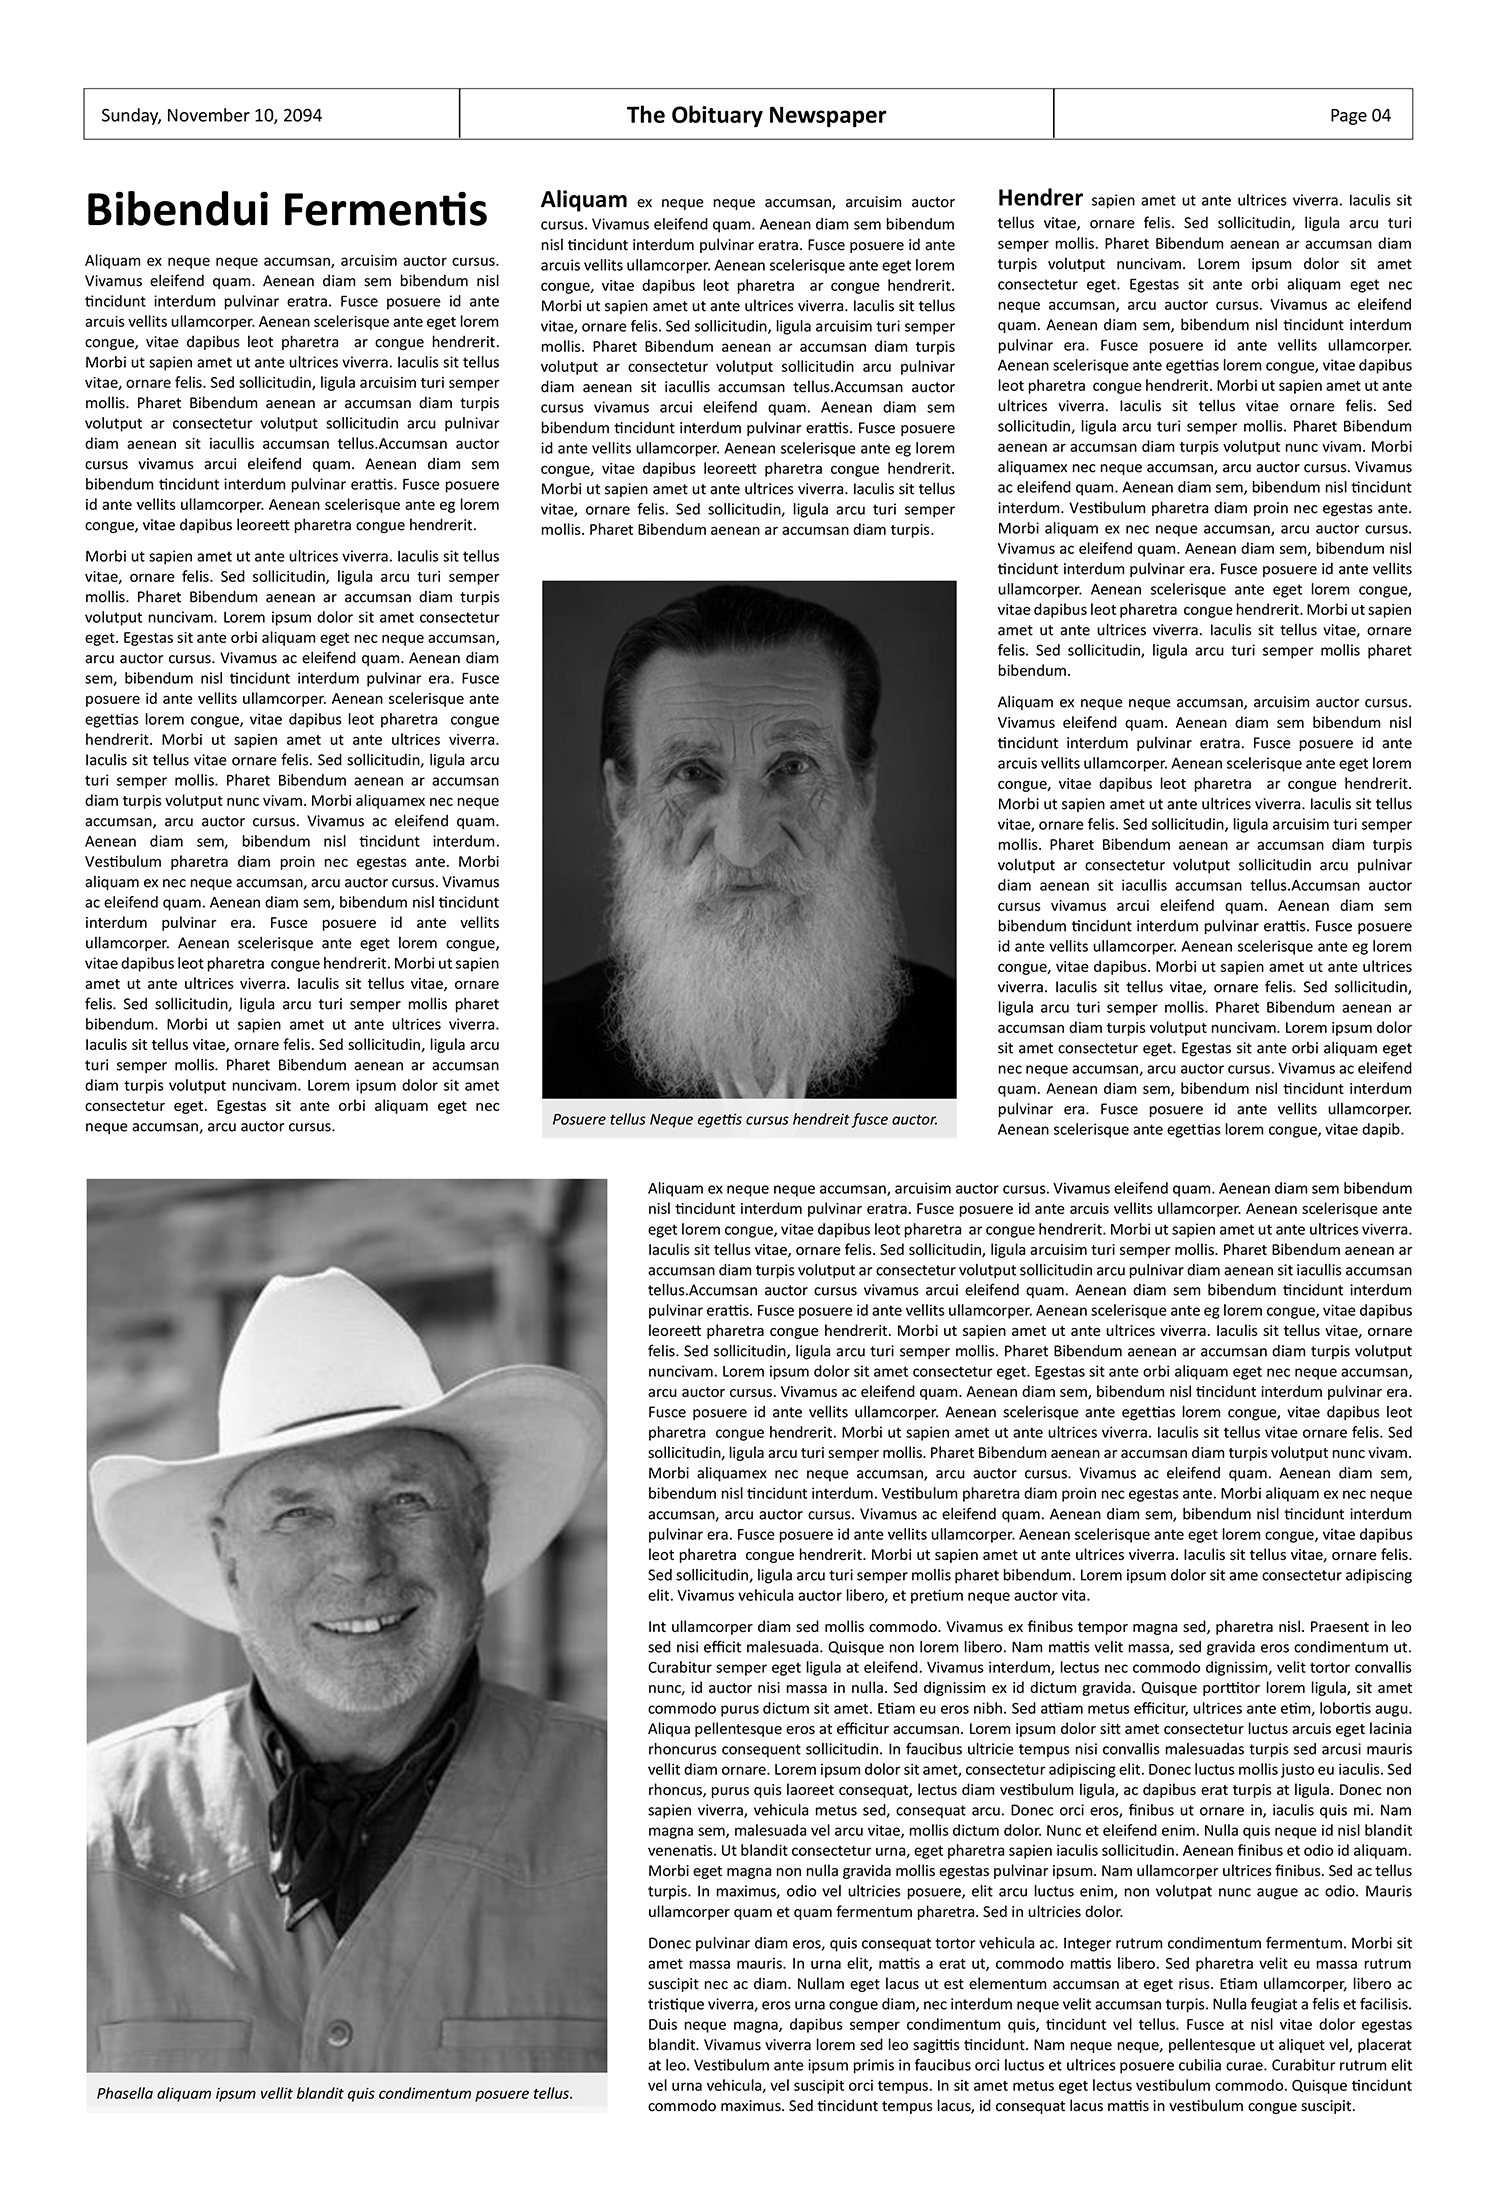 Broadsheet Newspaper Obituary Page Template - Page 04